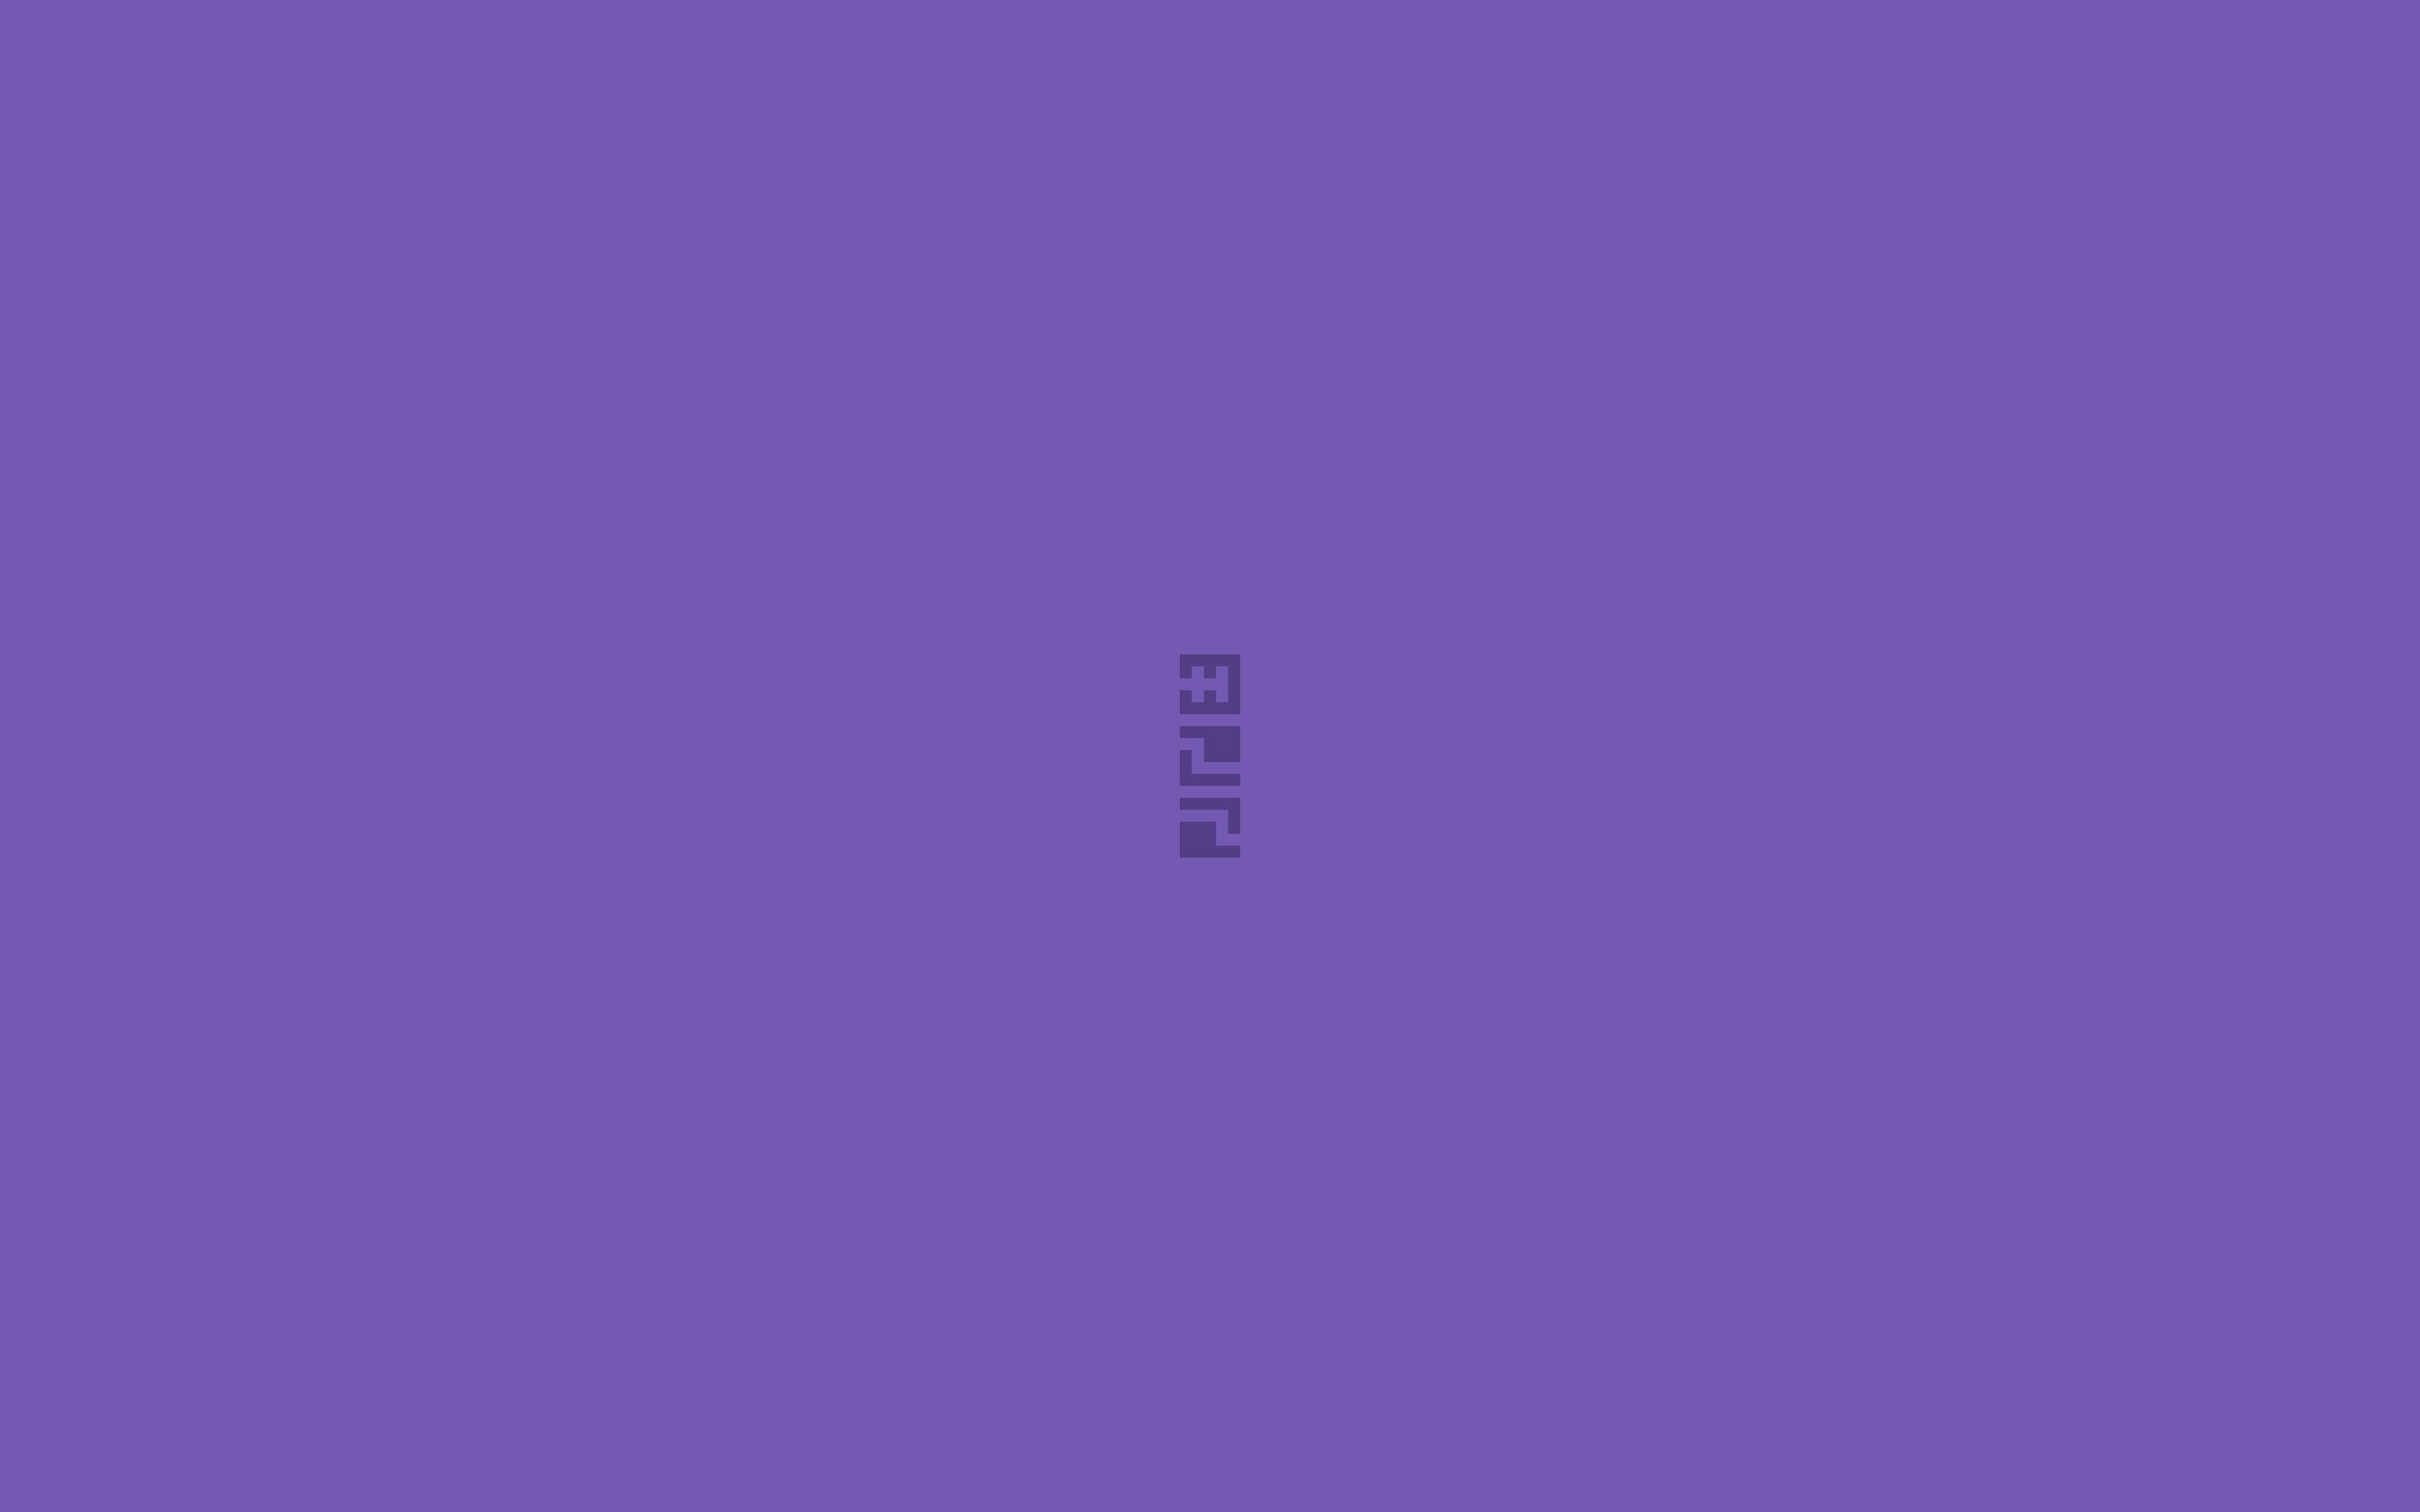 General 2880x1800 purple background shapes digital art minimalism simple background